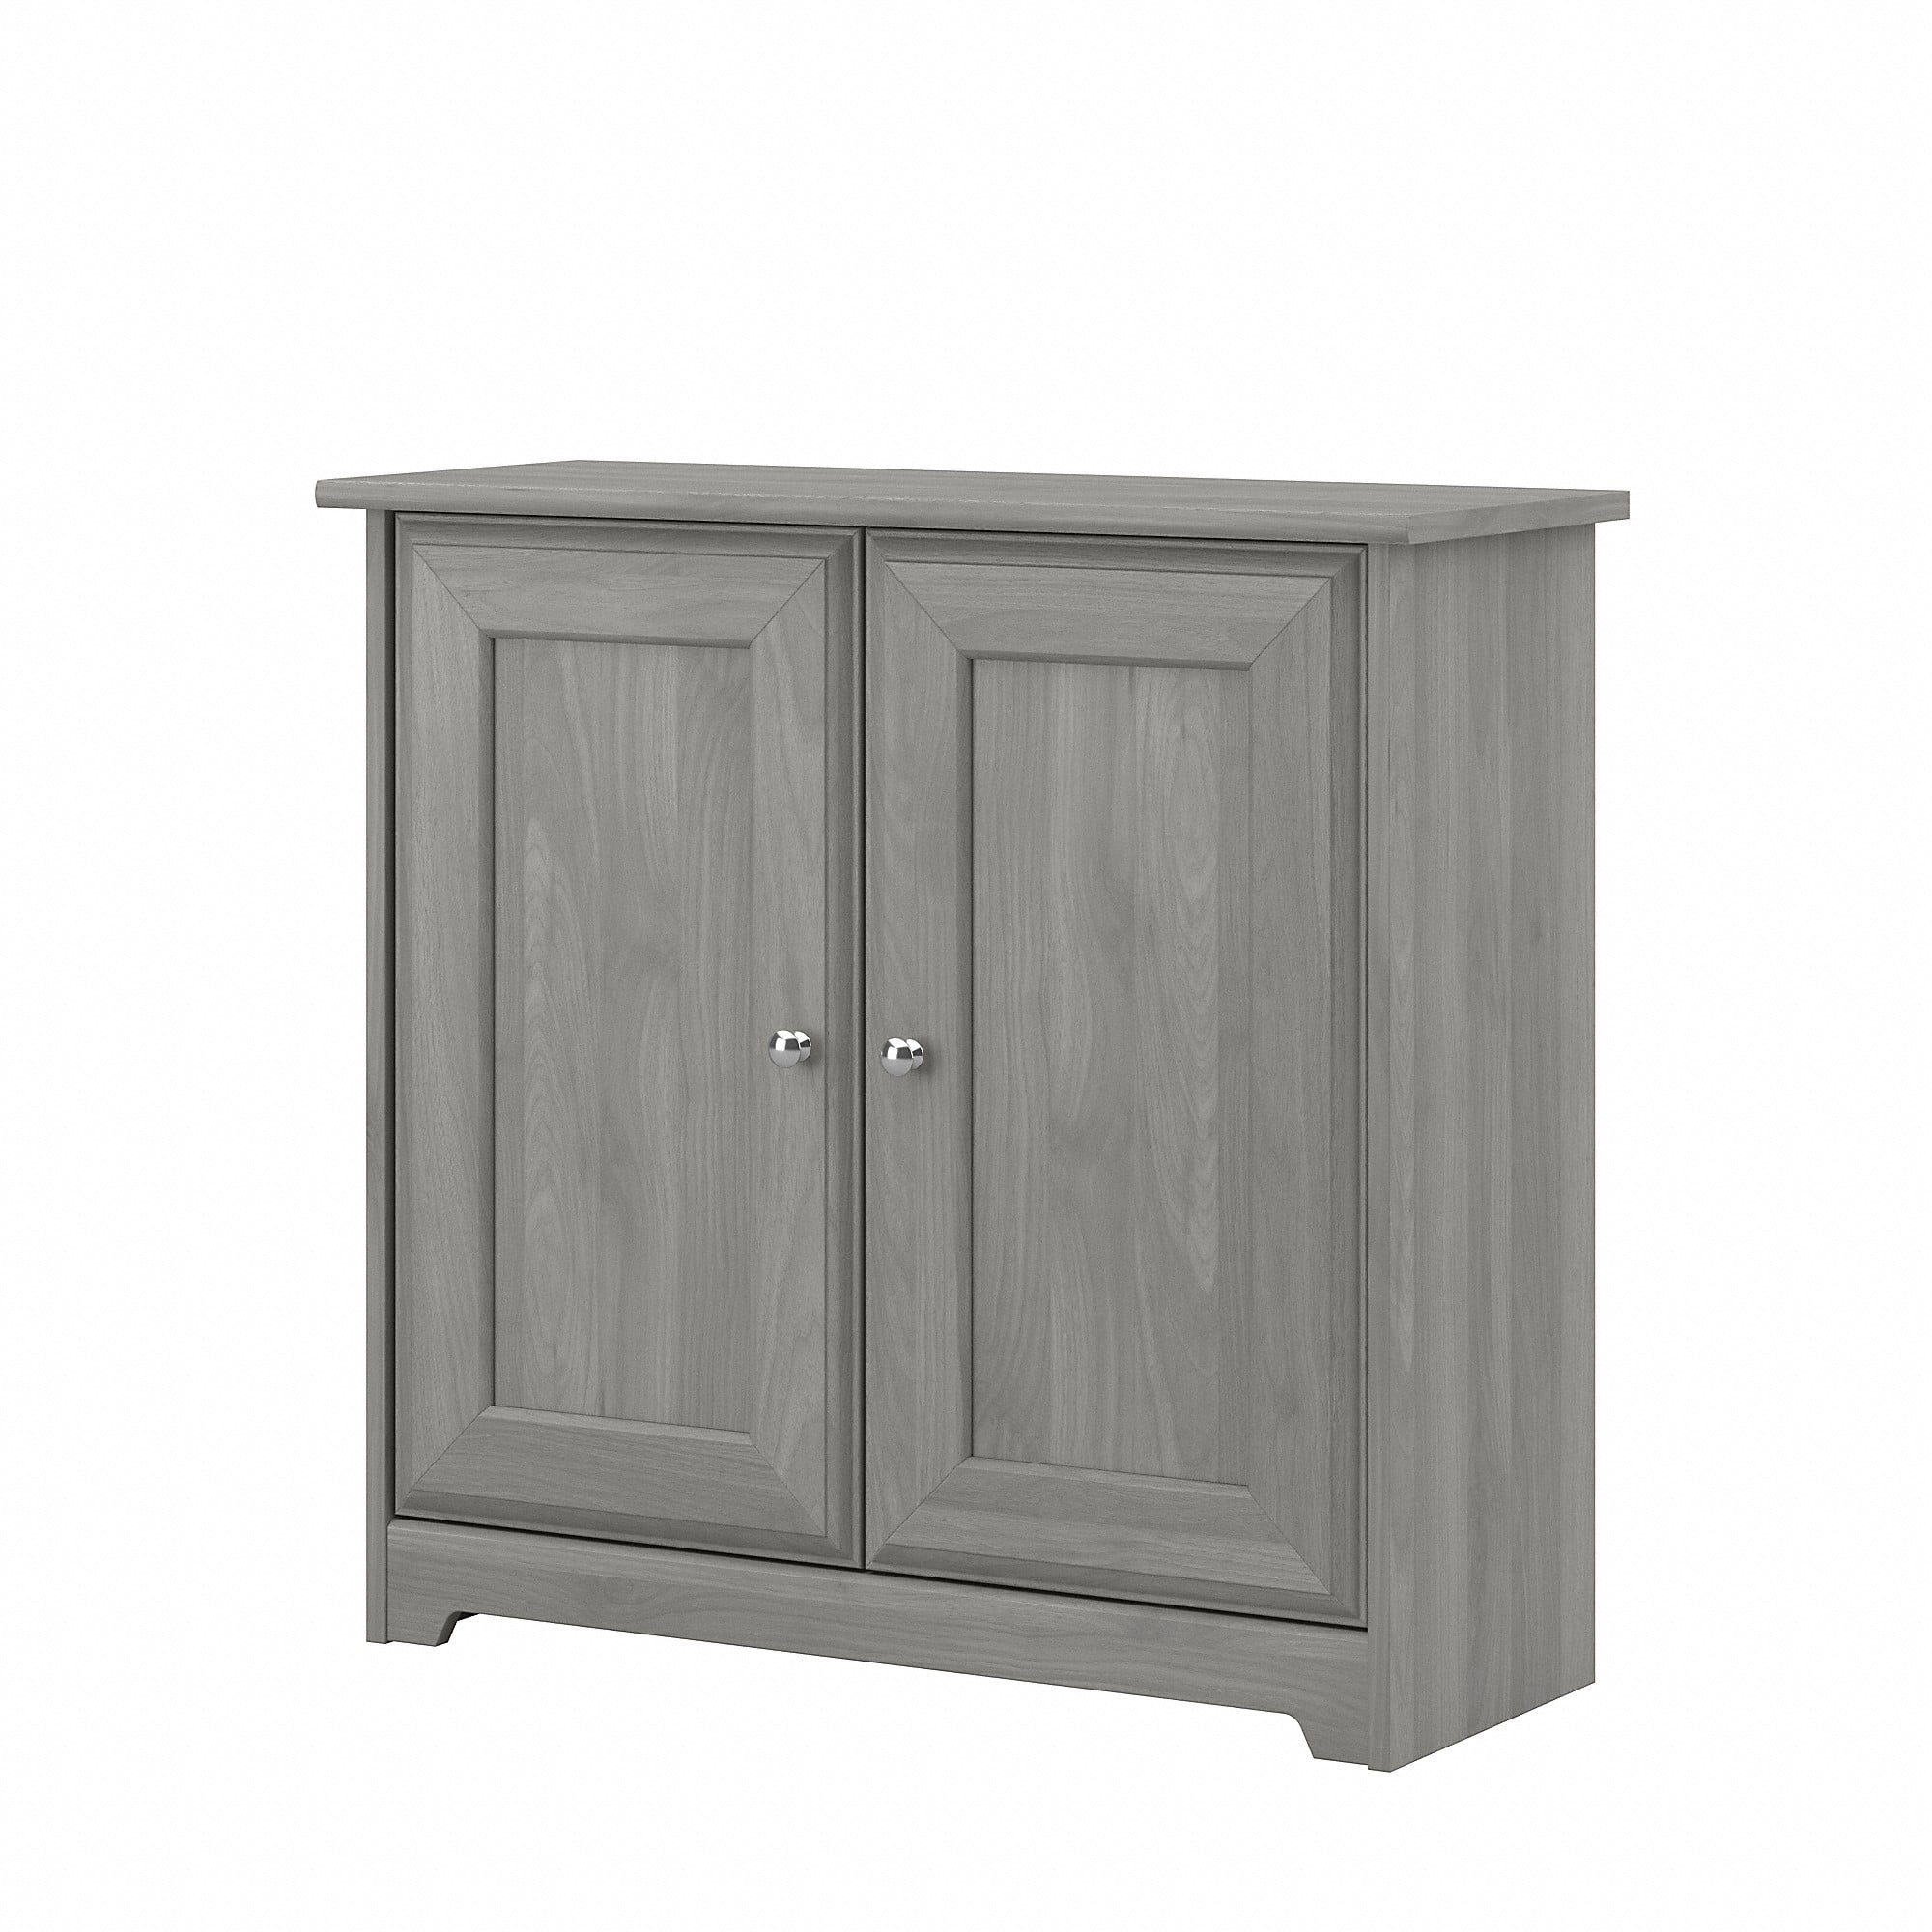 Bush Furniture Cabot Small Storage Cabinet with Doors - Walmart.com